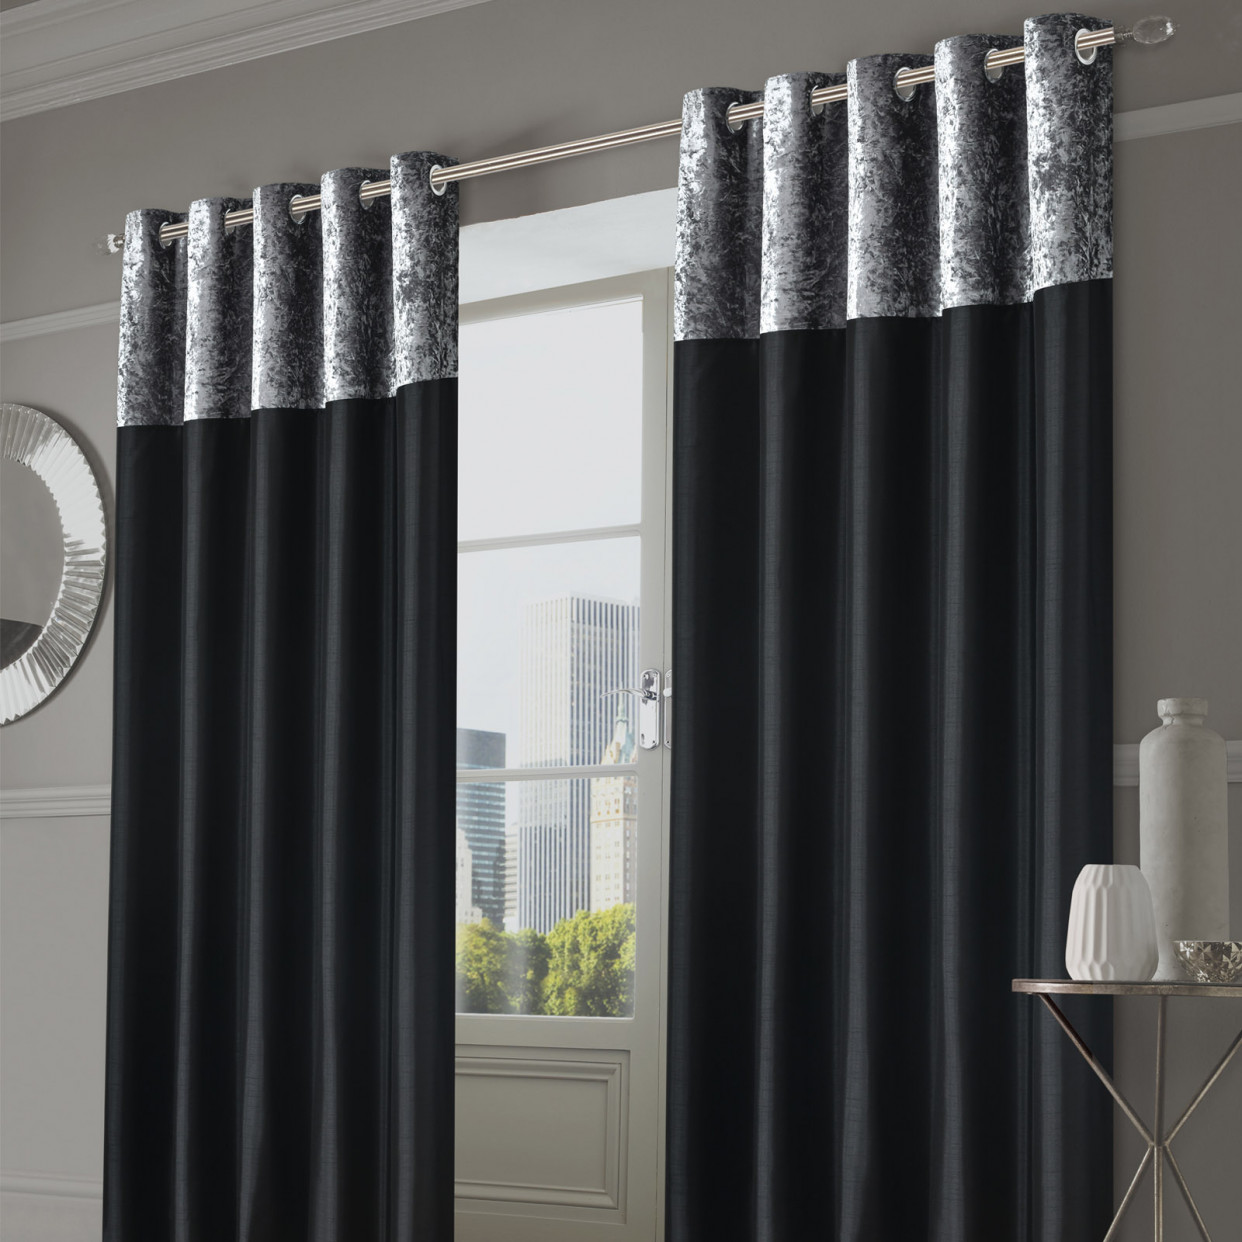 Sienna Home Manhattan Crushed Velvet Band Eyelet Curtains - Black, 66" x 72">